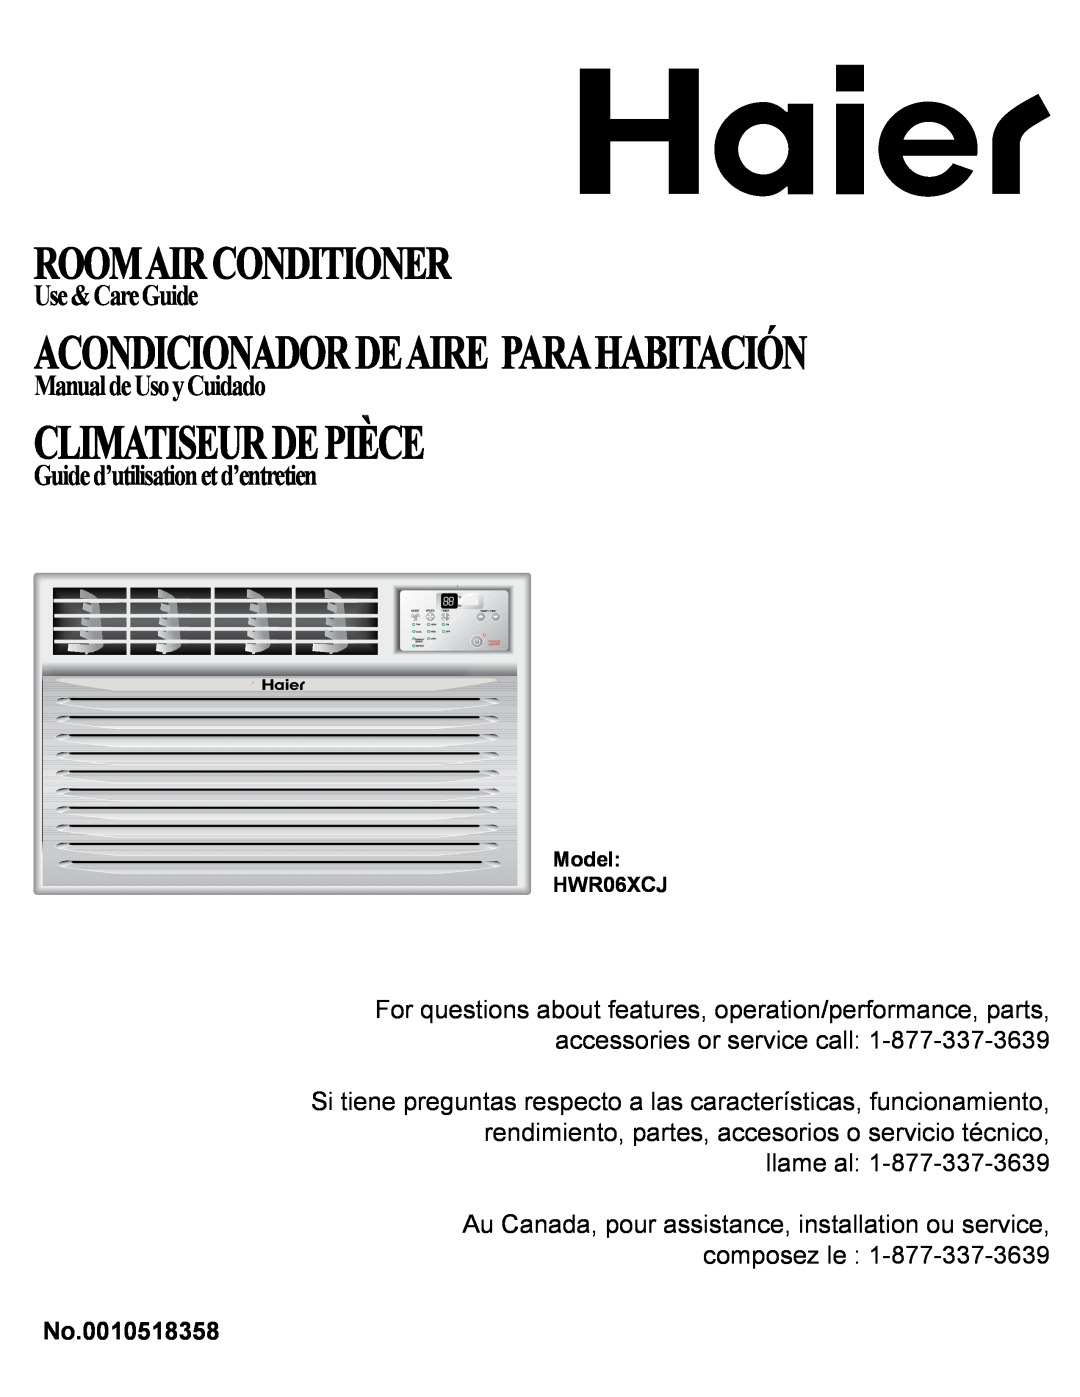 Haier 0010518358 manual Climatiseurdepièce, Roomairconditioner, Acondicionadordeaire Parahabitación, Use&CareGuide 